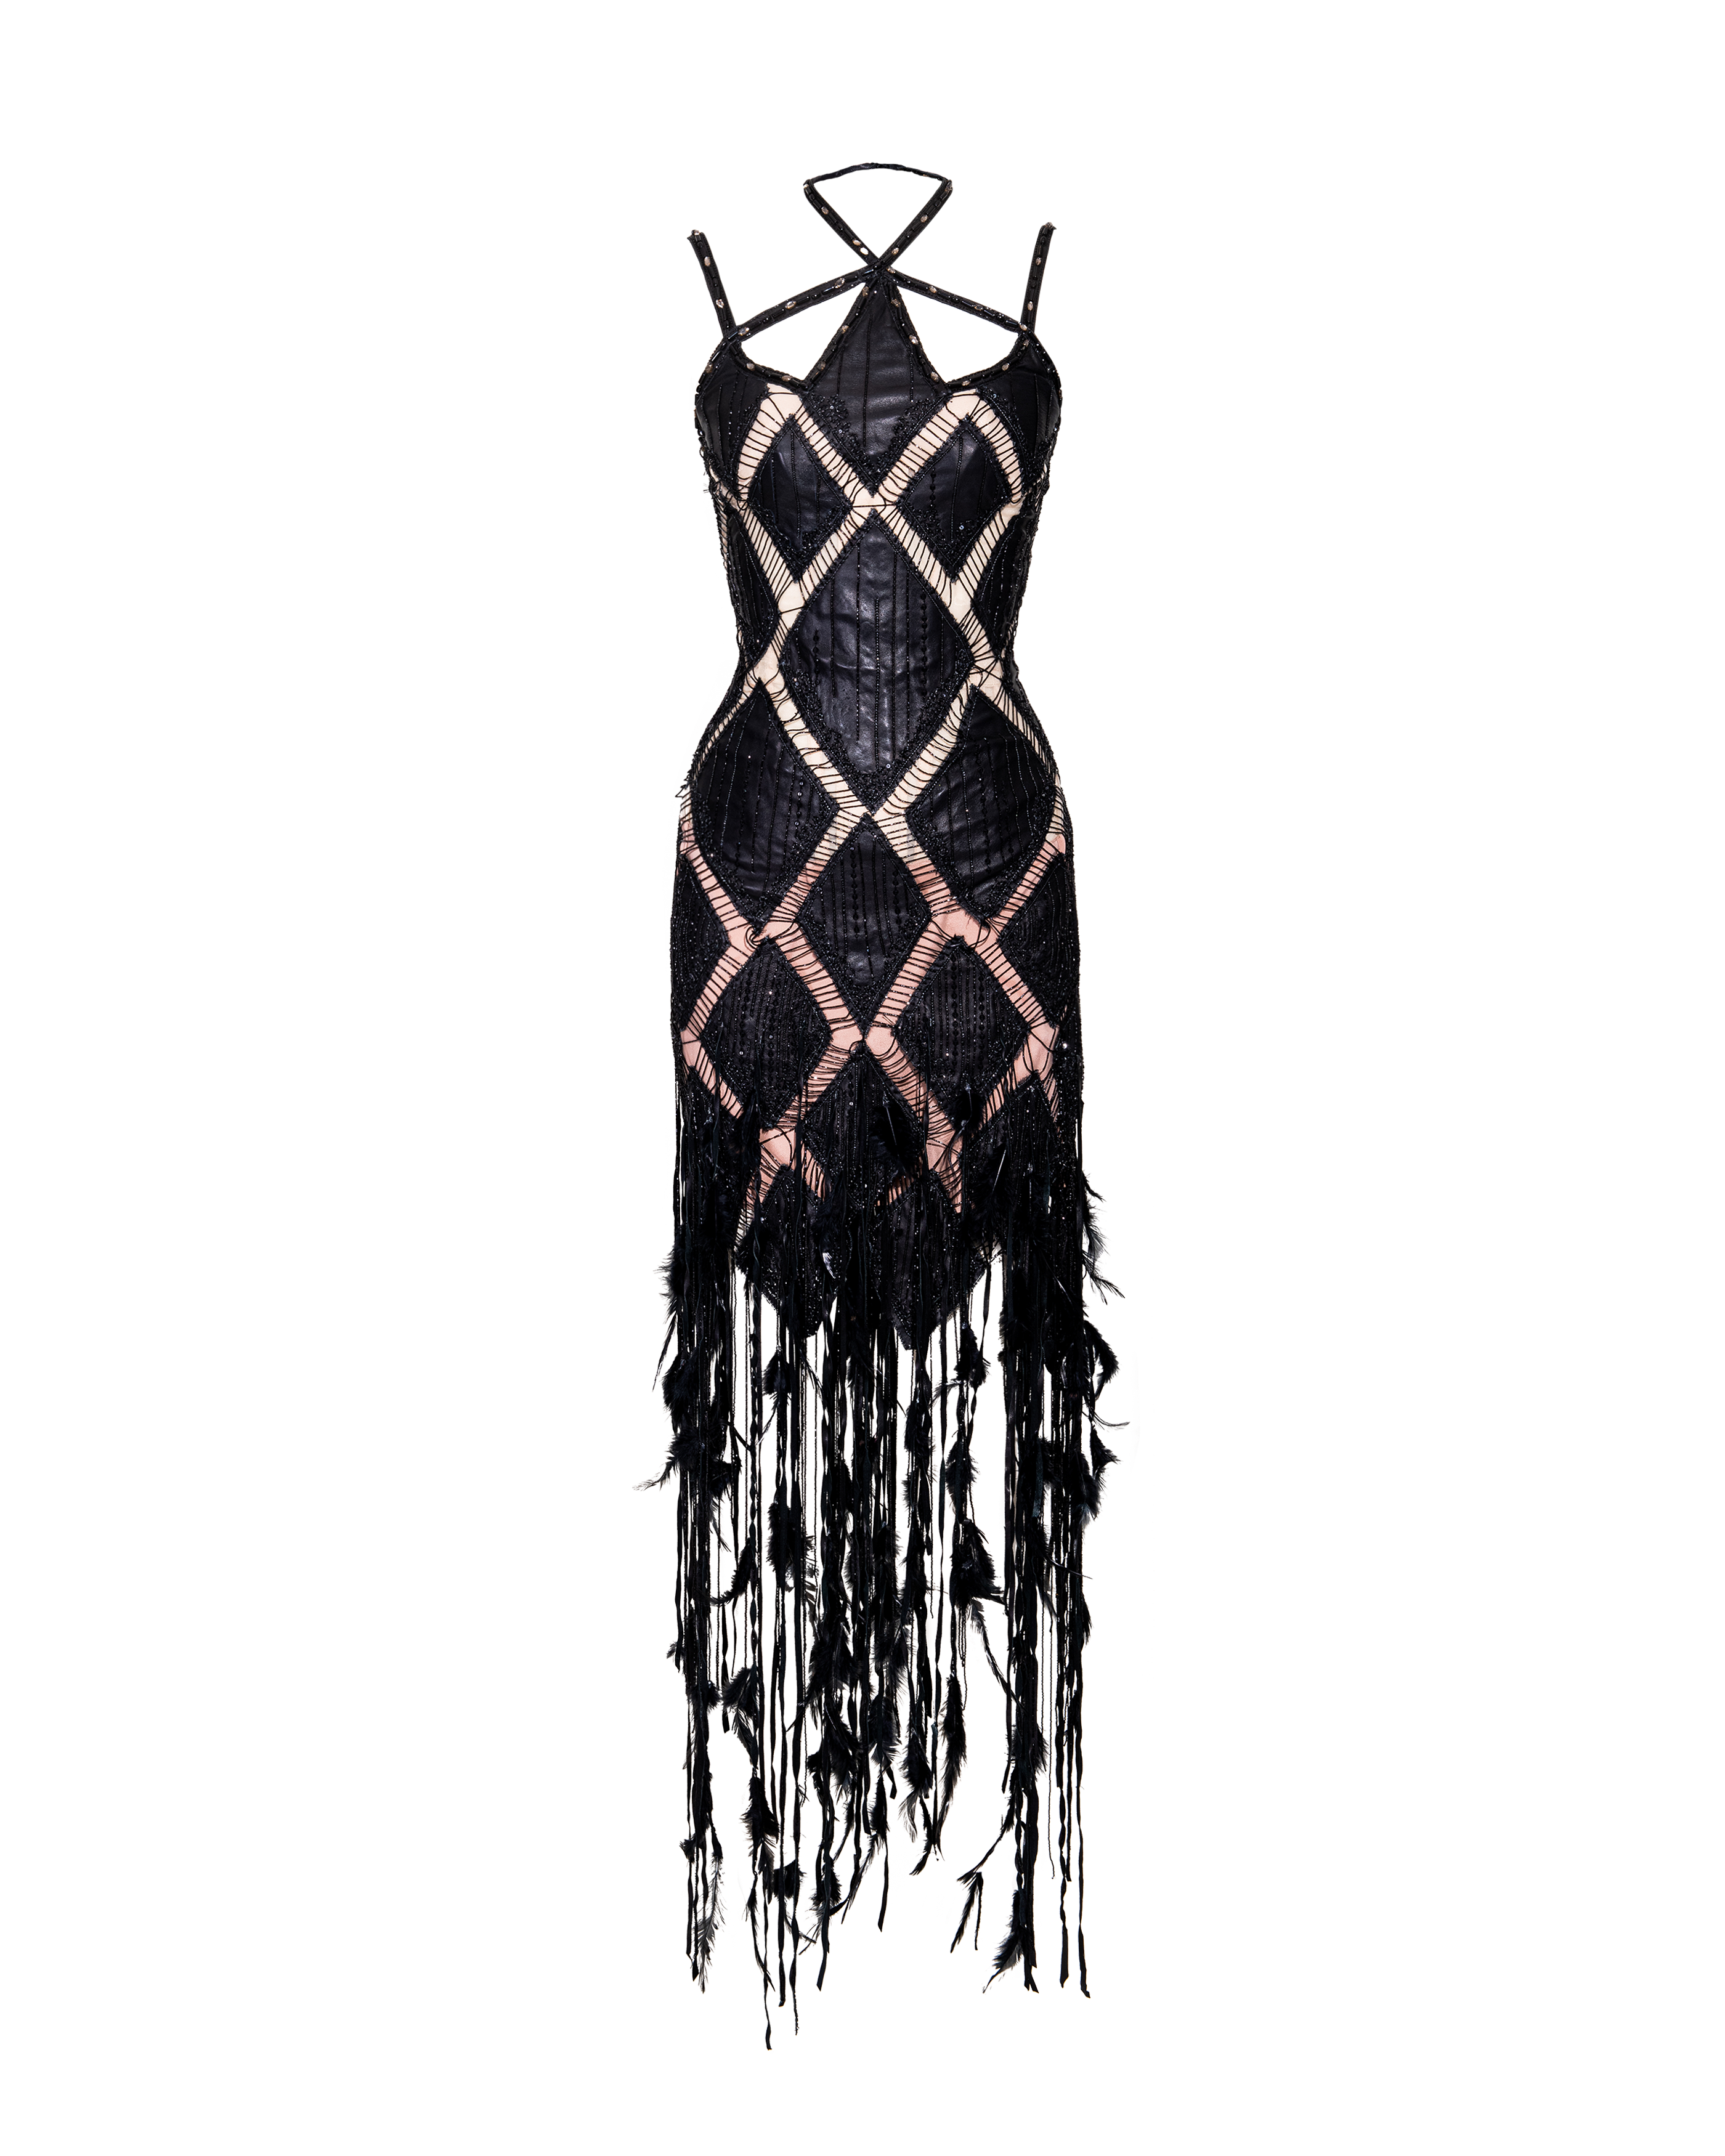 S/S 2004 Geometric Black Embellished Leather Cutout Corset Fringe Dress